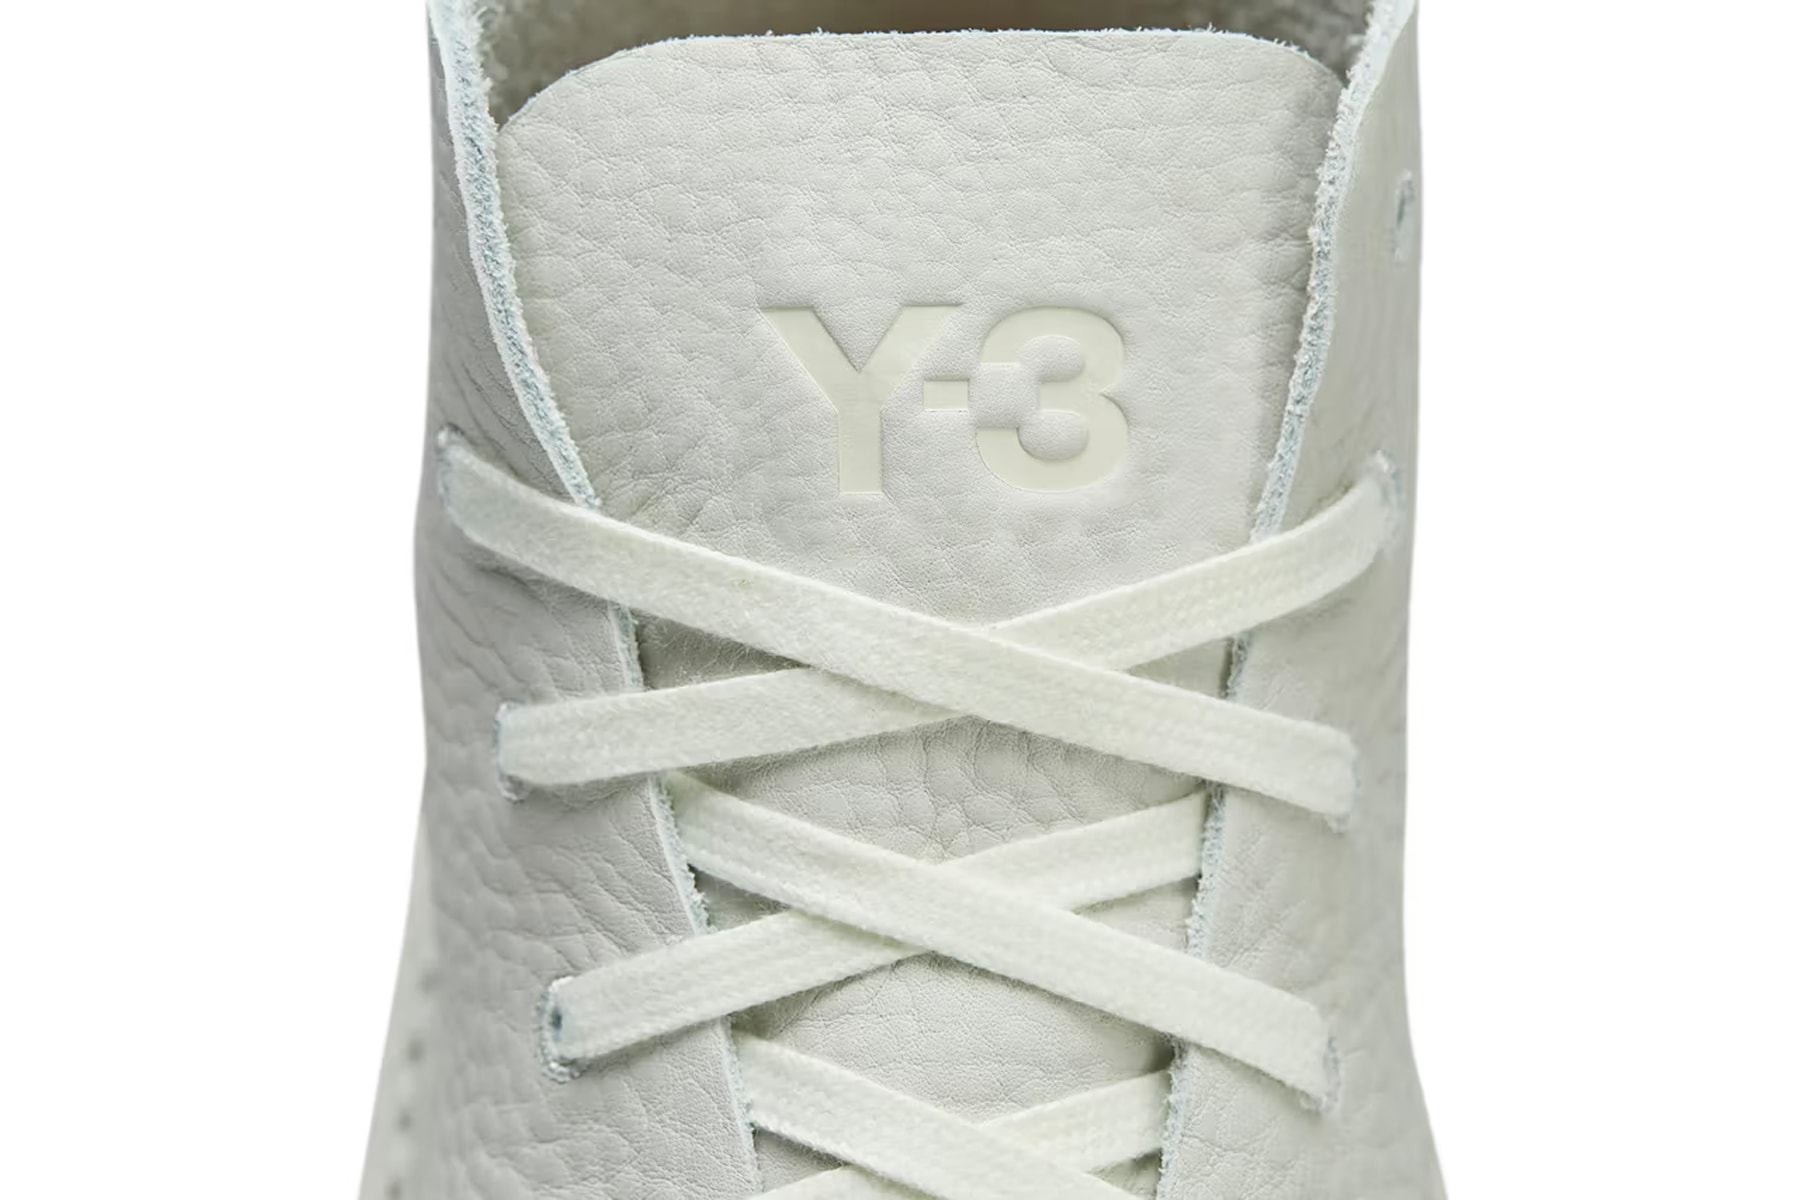 Y-3 正式推出全新「KYASU」鞋款